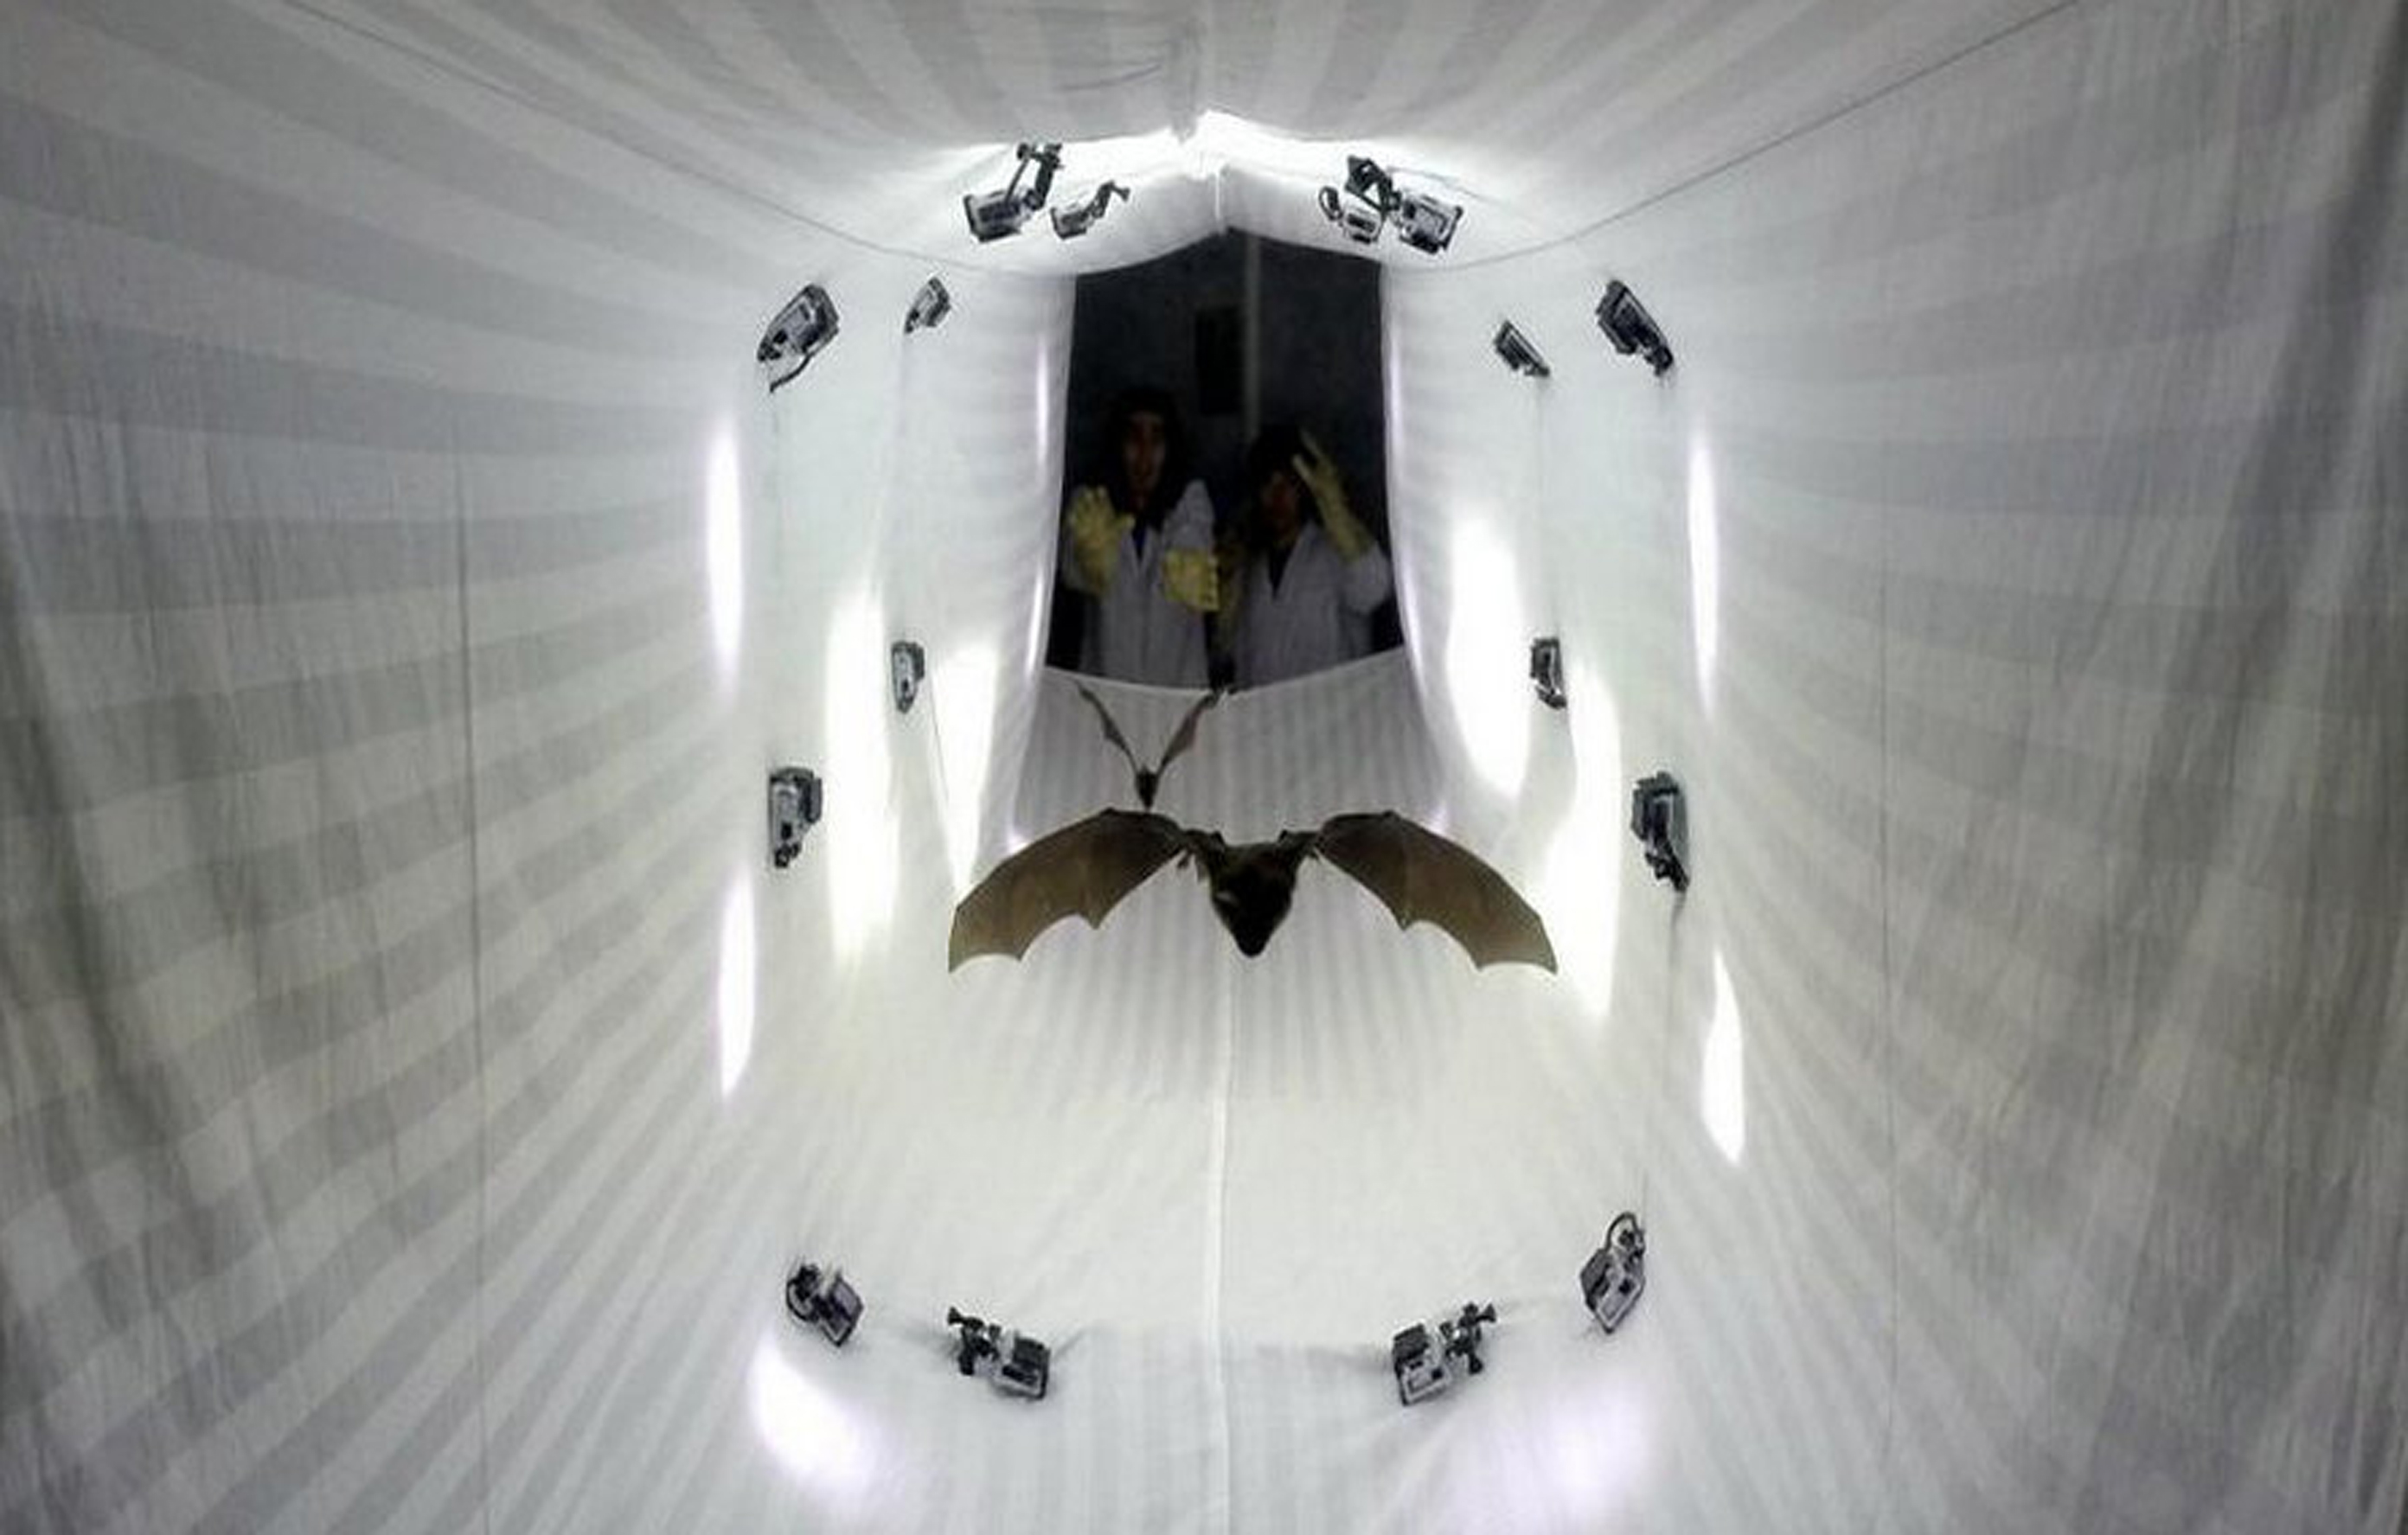 Bats flying through a tunnel